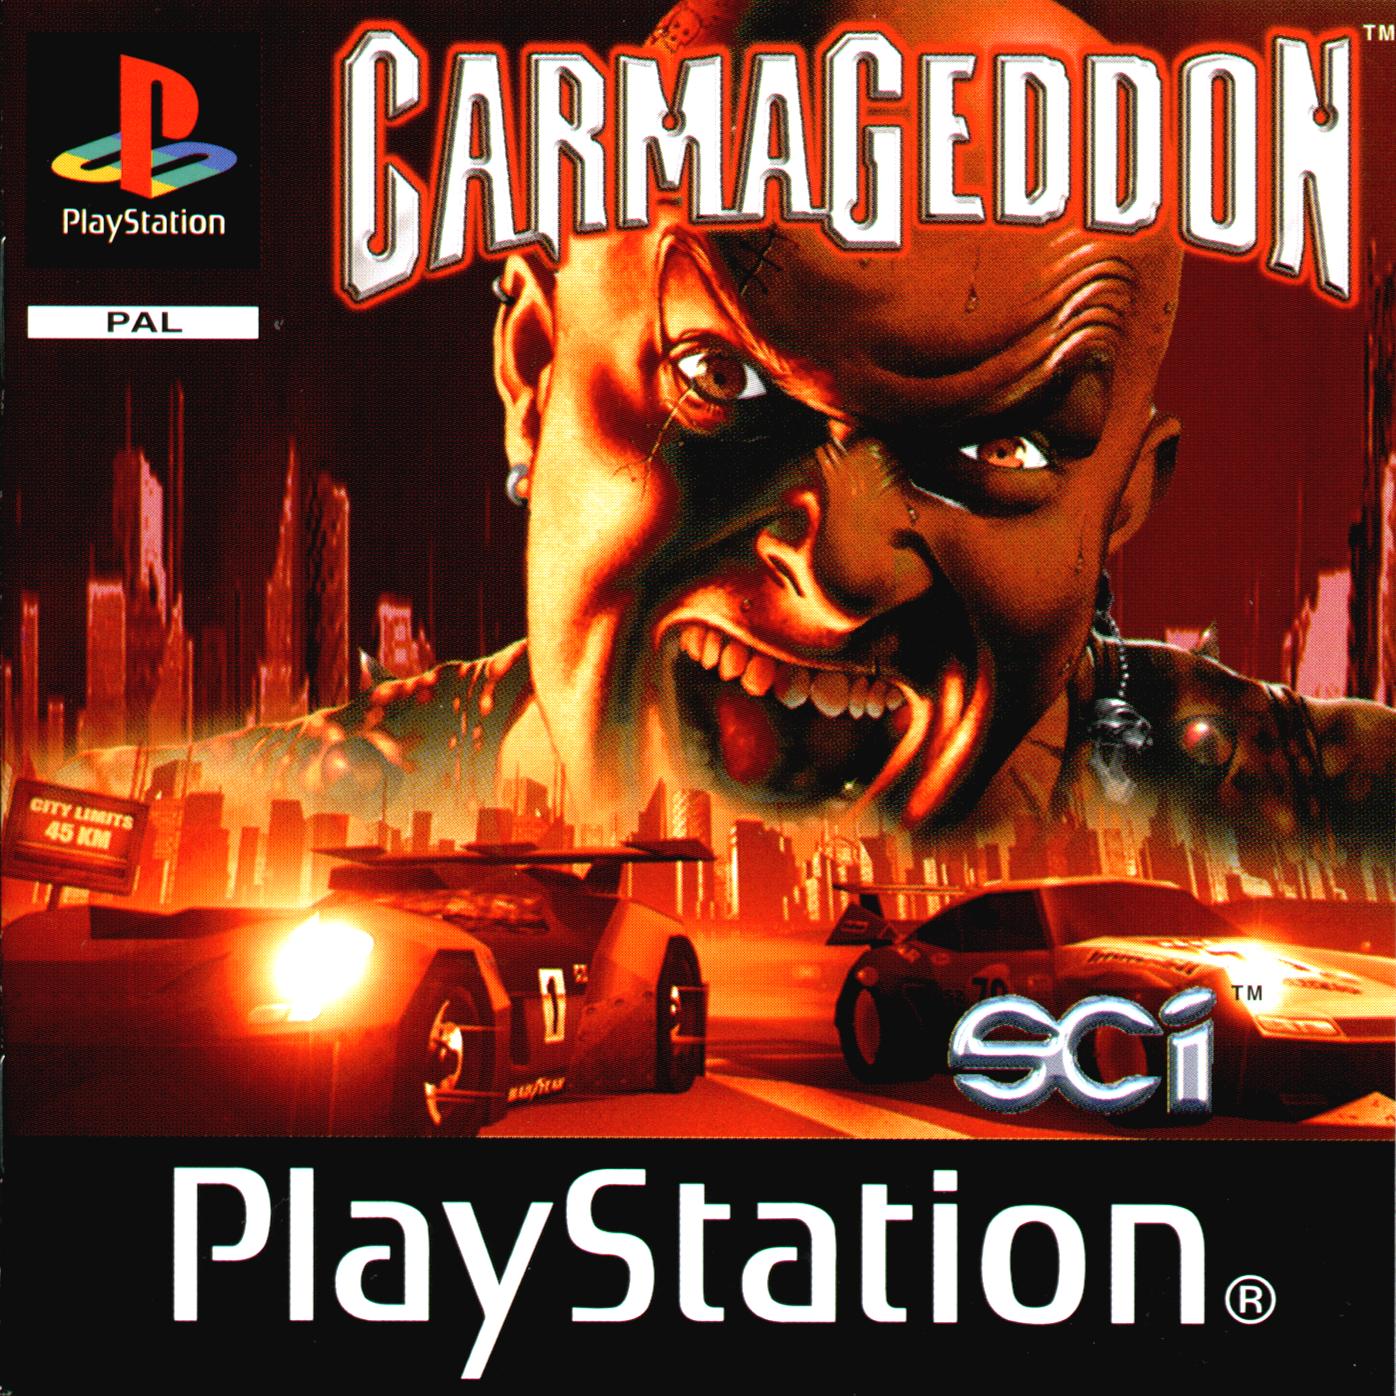 The coverart image of Carmageddon